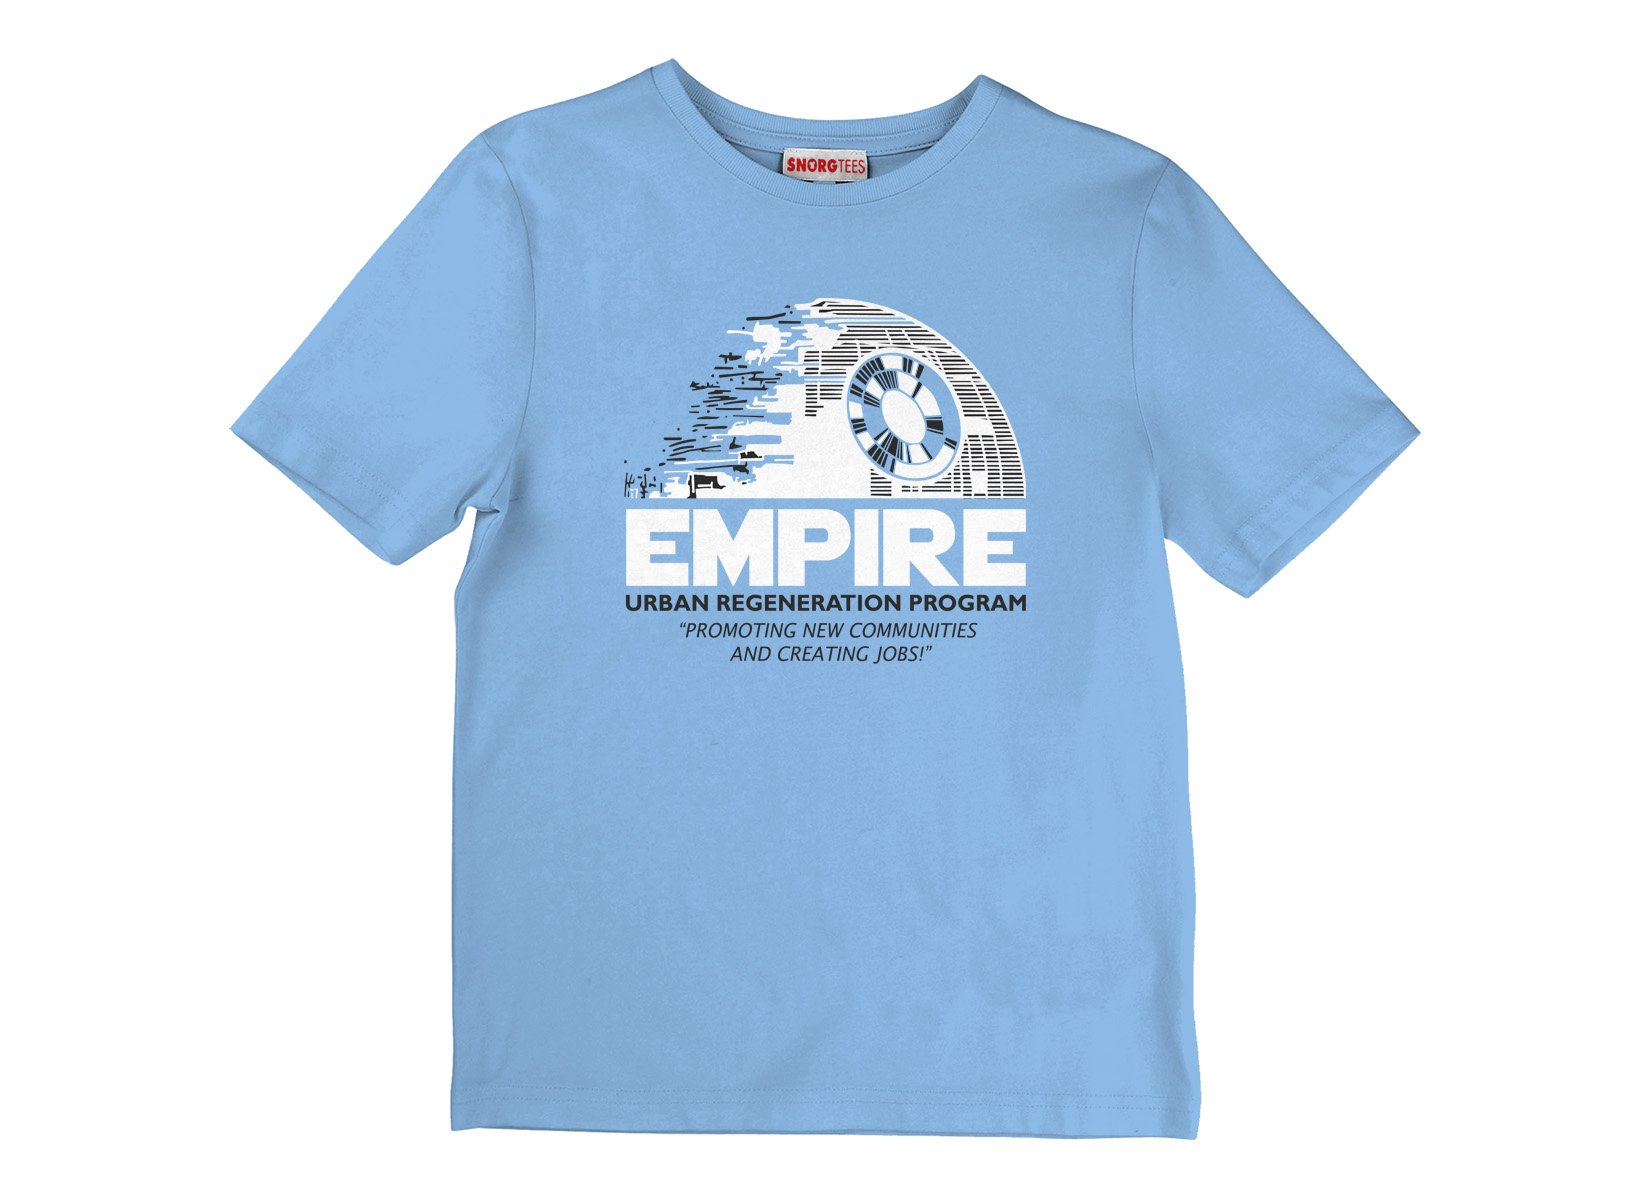 Empire Urban Regeneration Star Wars T Shirt Image2